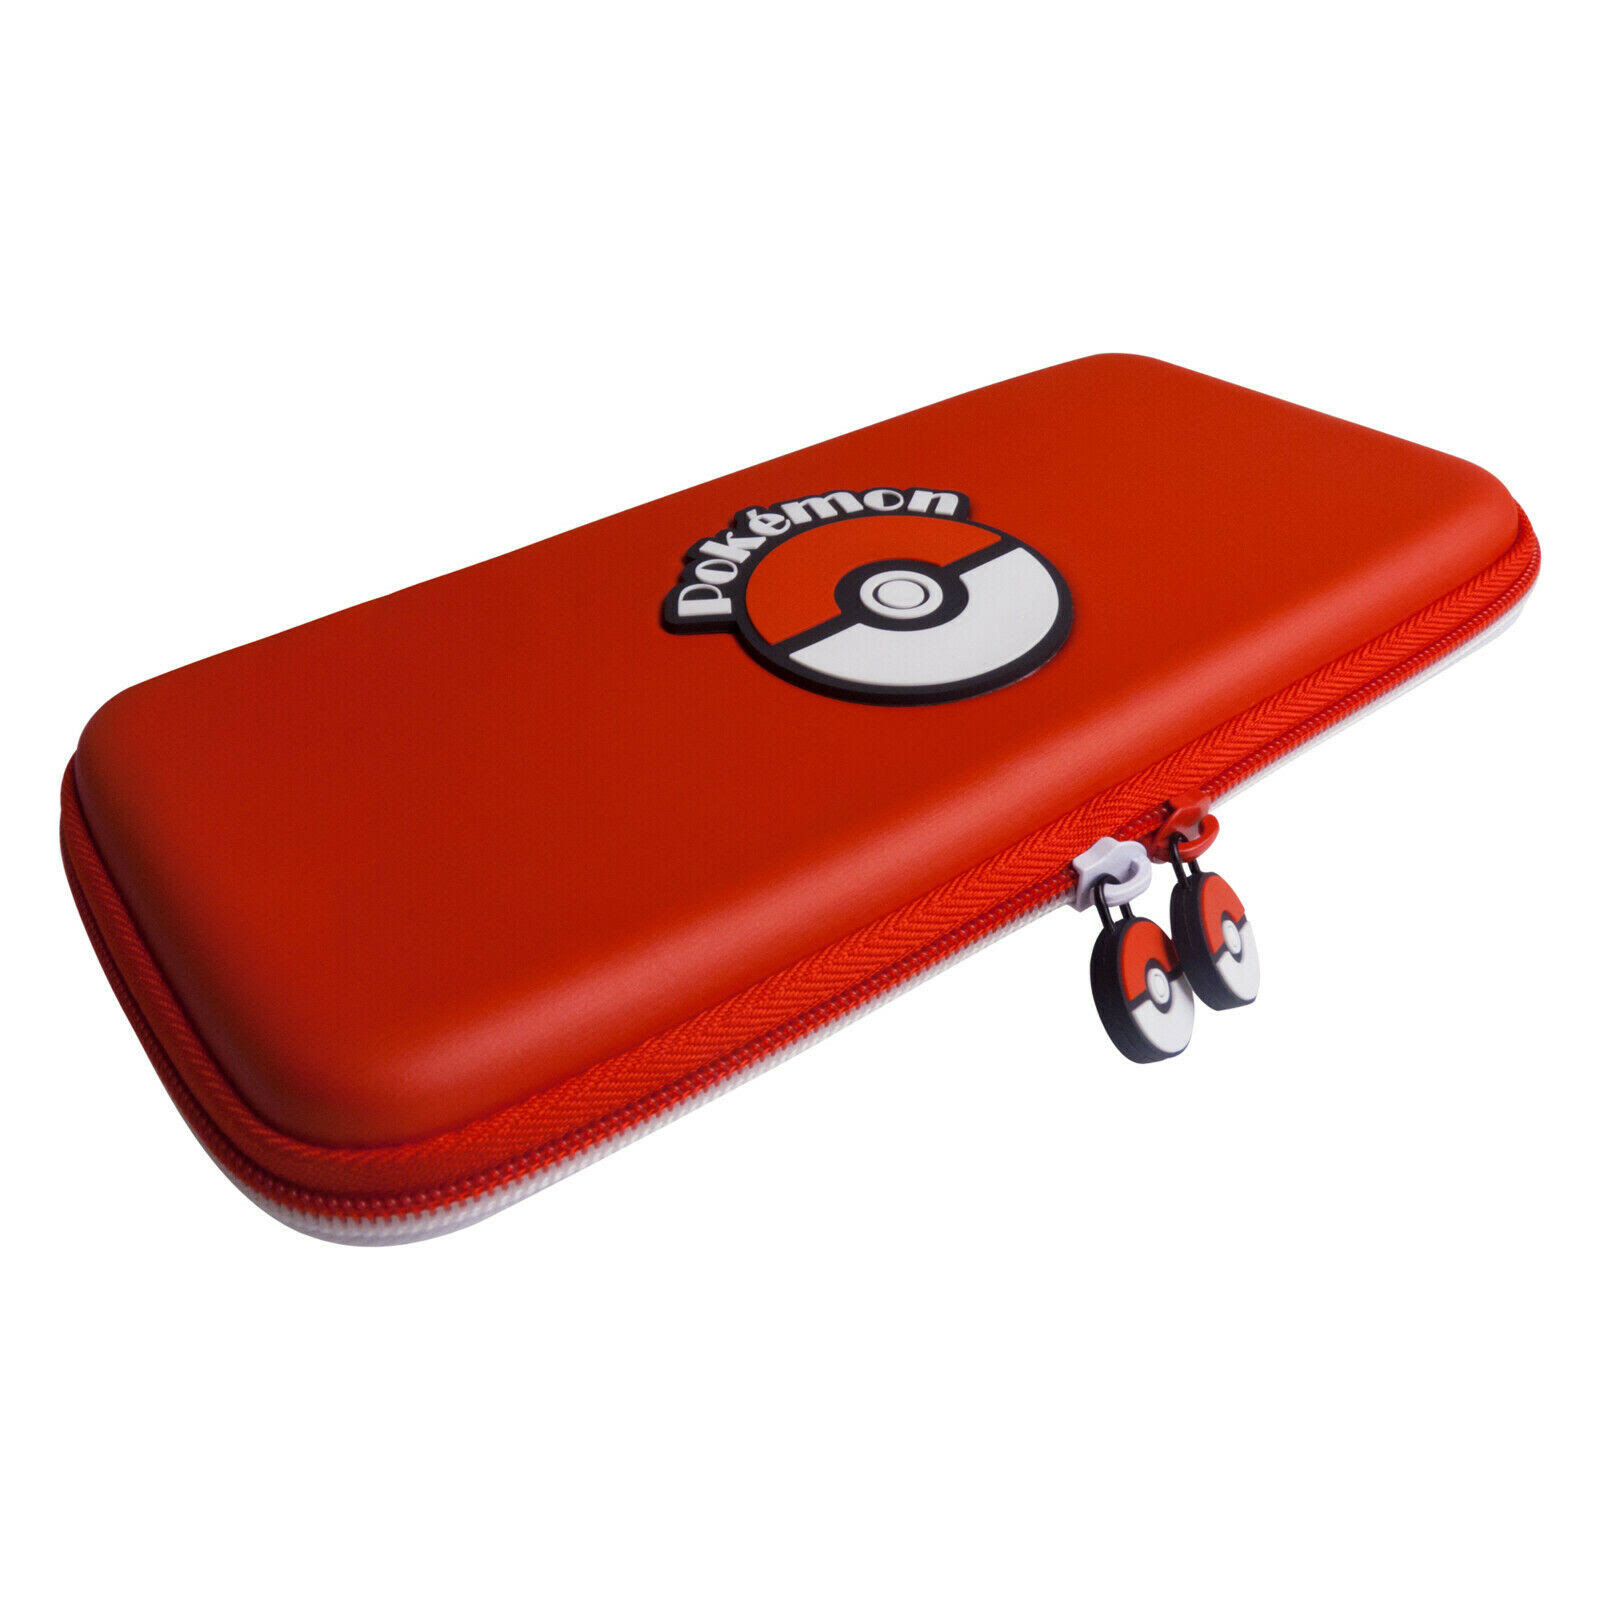 Nintendo Switch Pokemon Pouch - Red